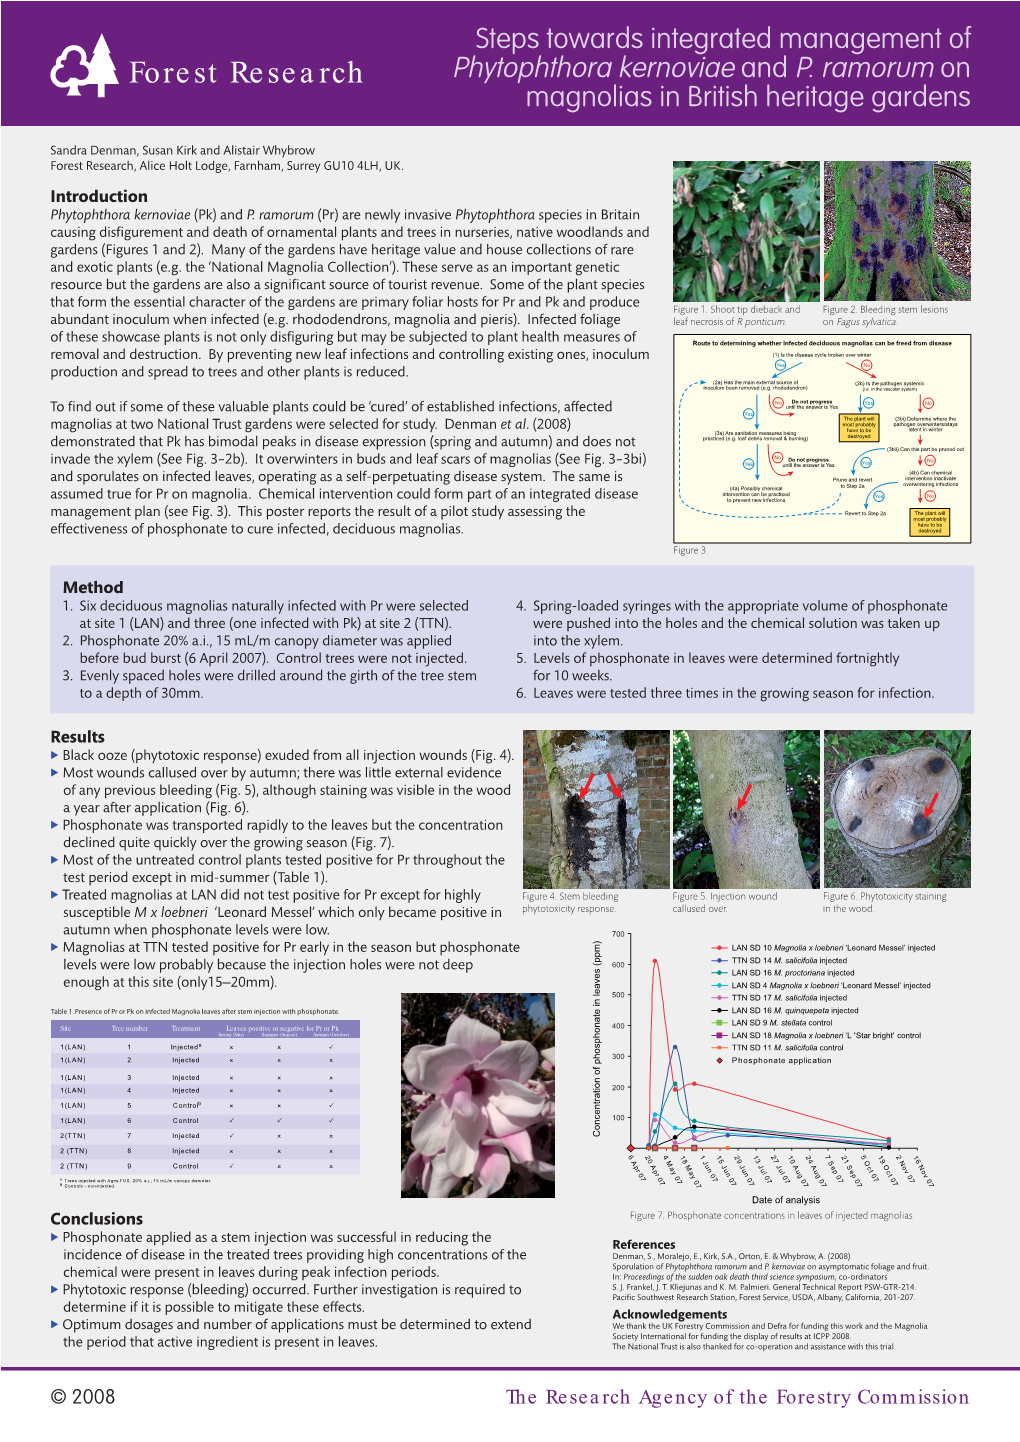 Phytophthora Magnolia Phosphonate Poster ICPP Aug 08